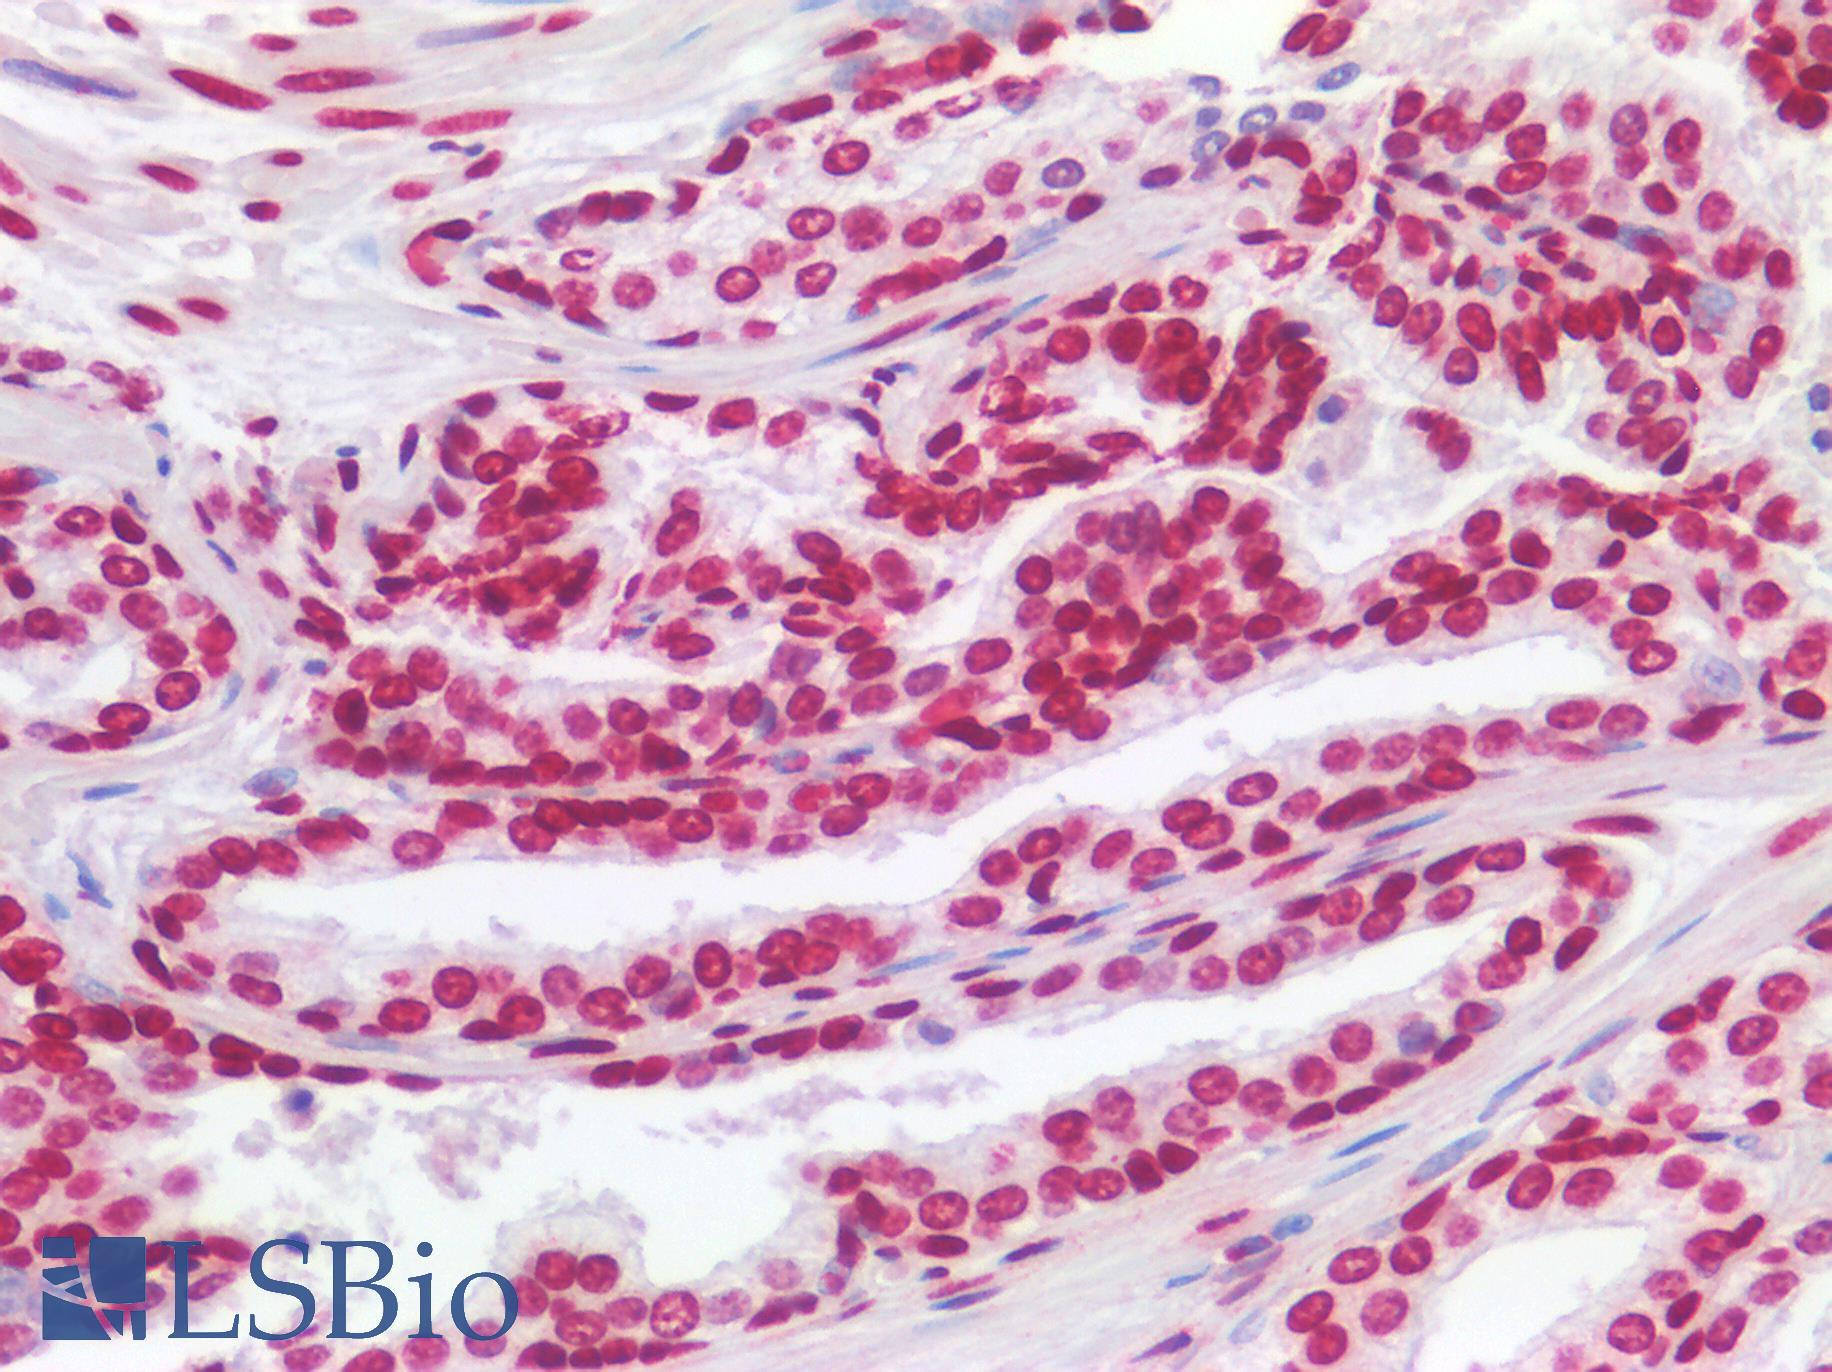 HMG1 / HMGB1 Antibody - Human Prostate: Formalin-Fixed, Paraffin-Embedded (FFPE)